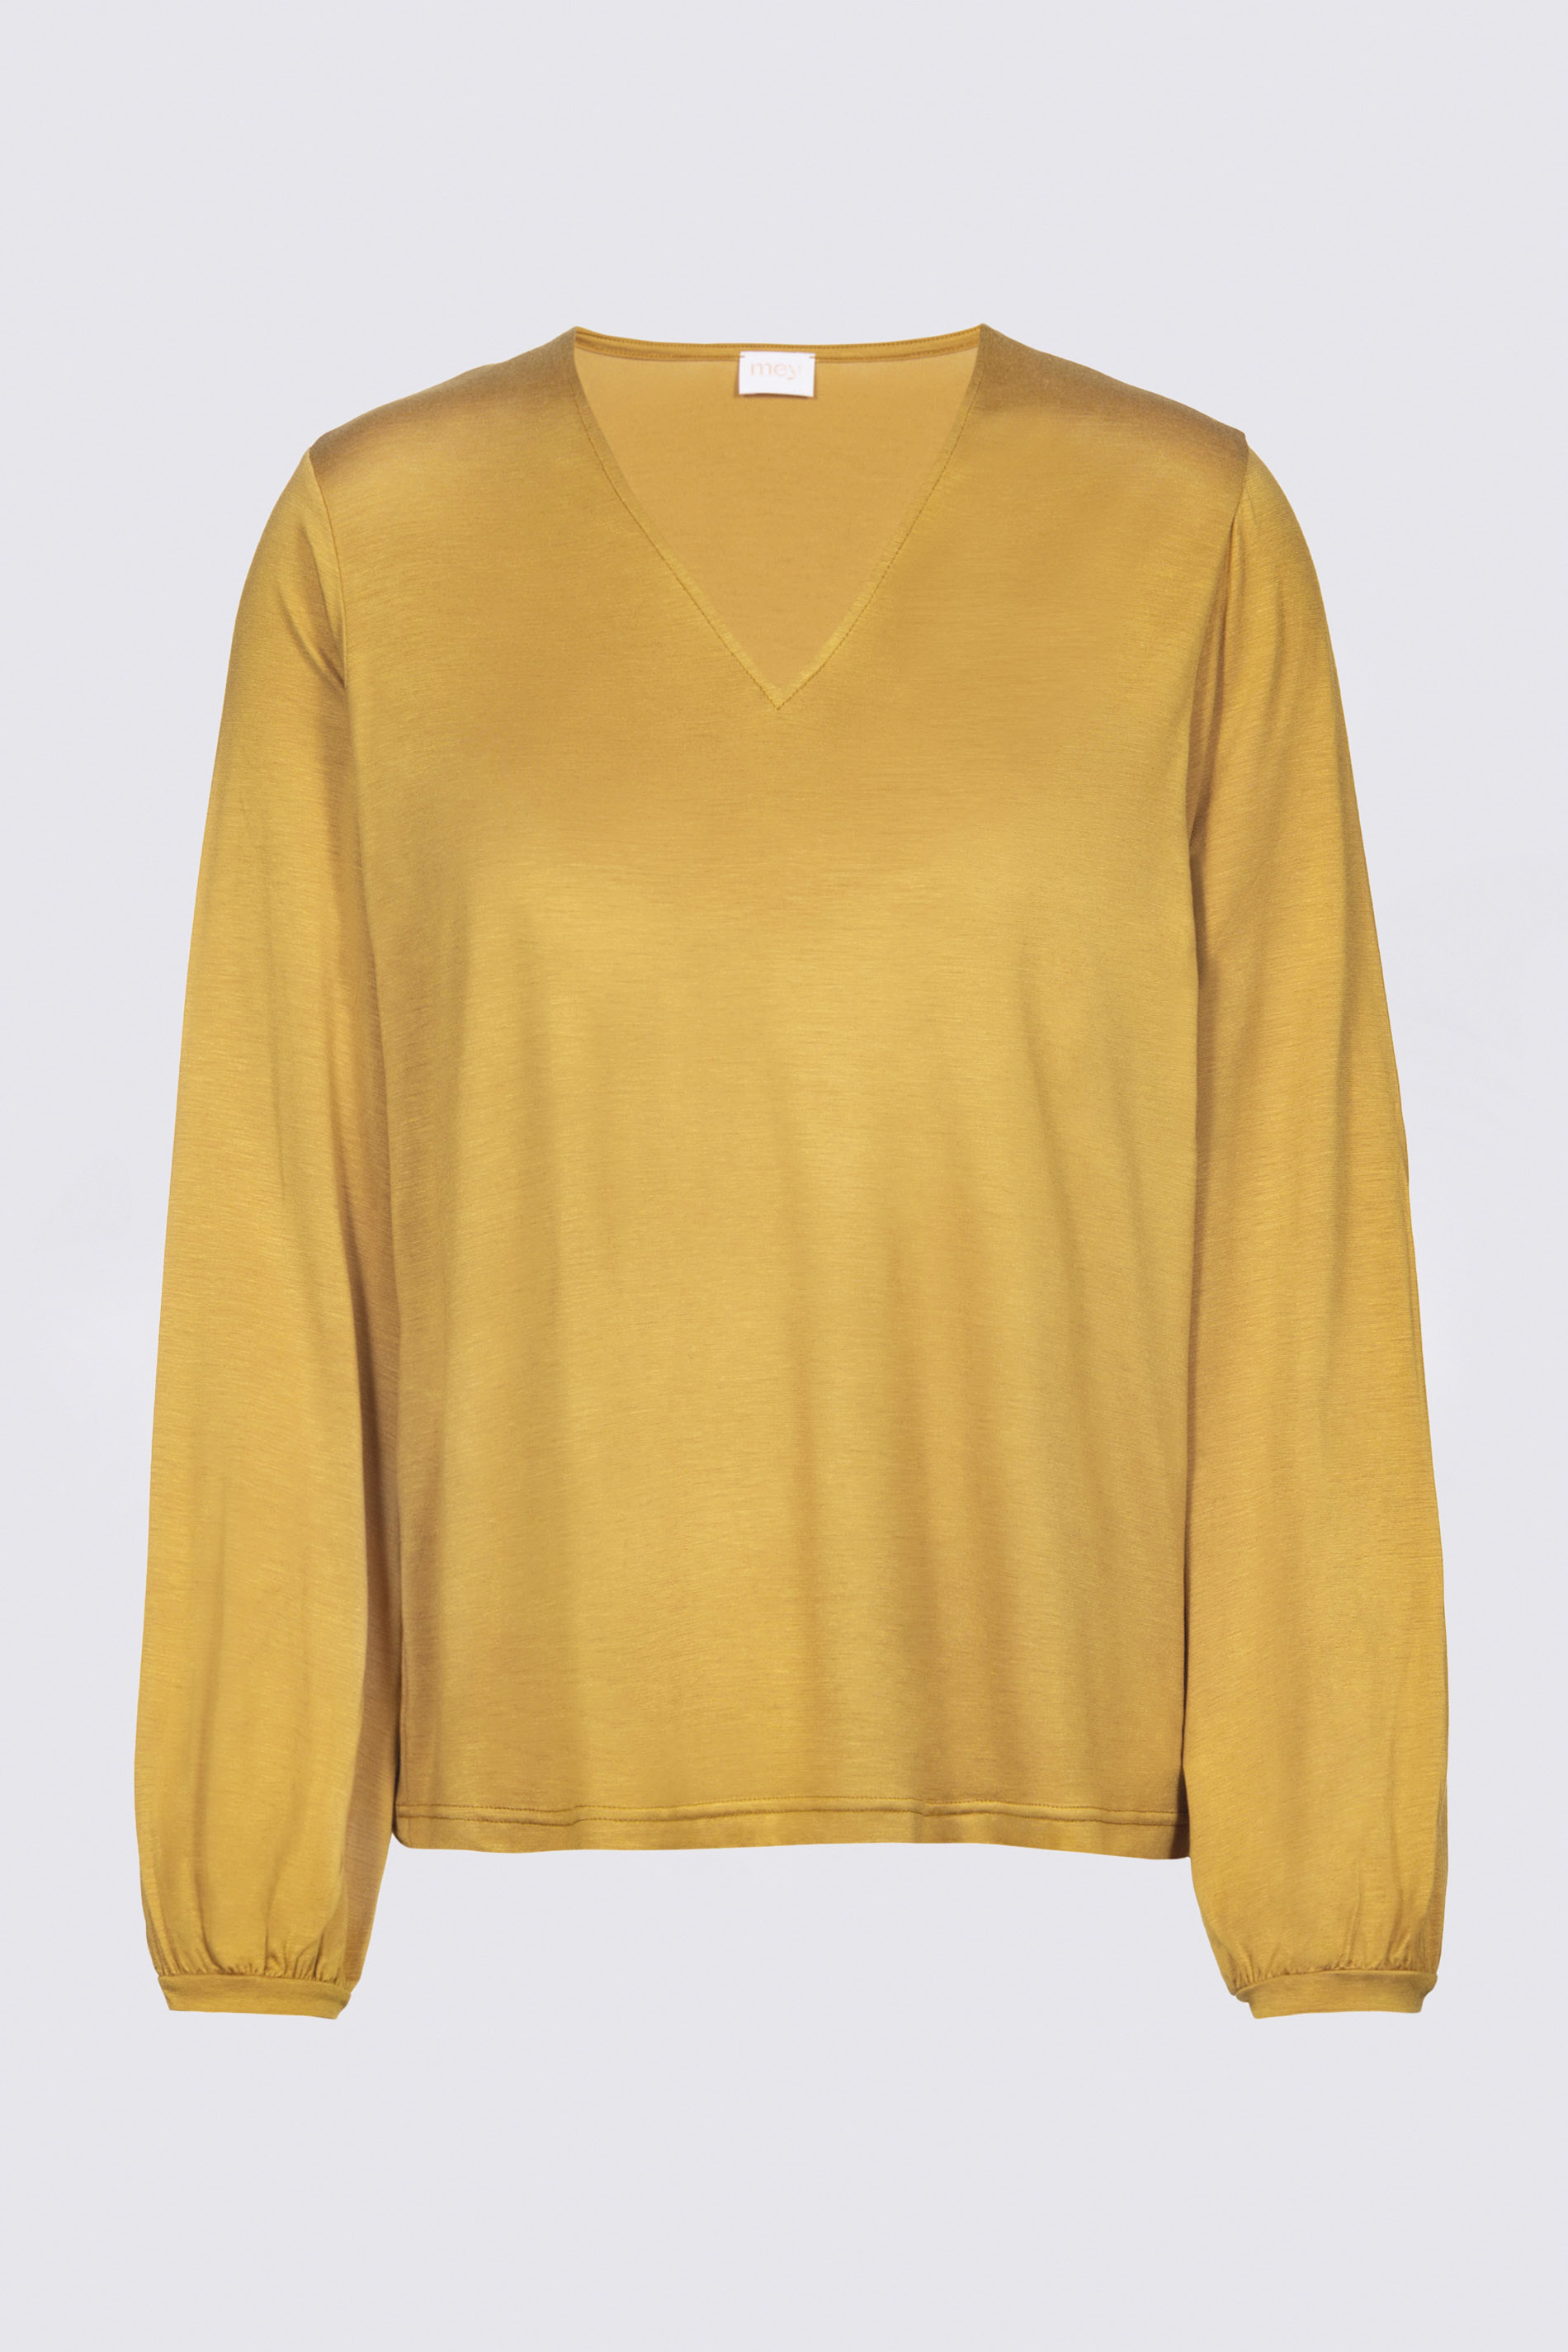 Shirt Wintergold Serie Alena Uitknippen | mey®